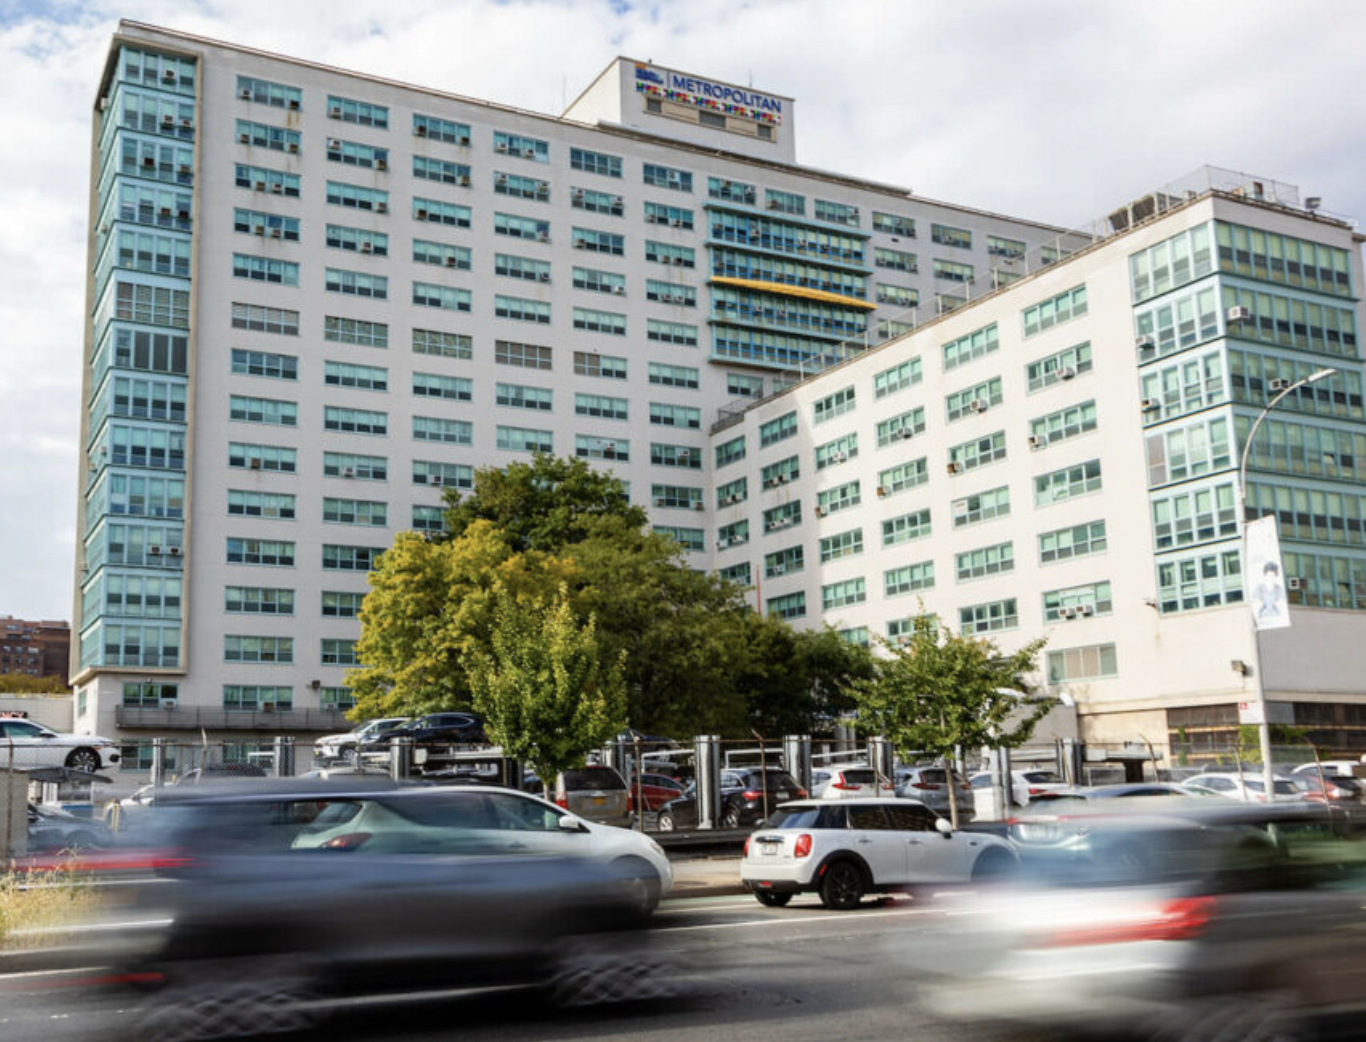 NYC Health Hospitals - Metropolitan